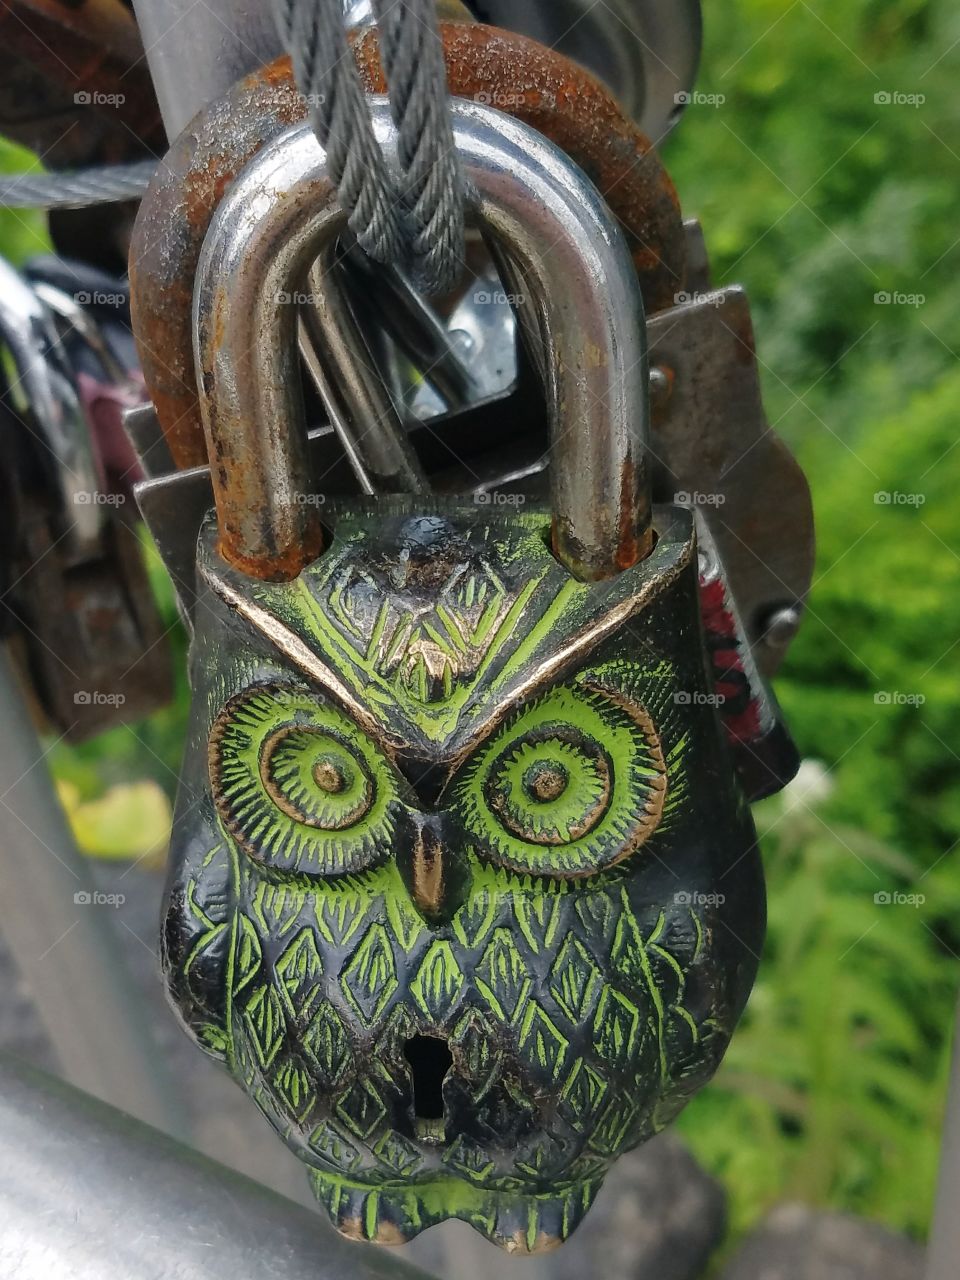 A neat owl love lock